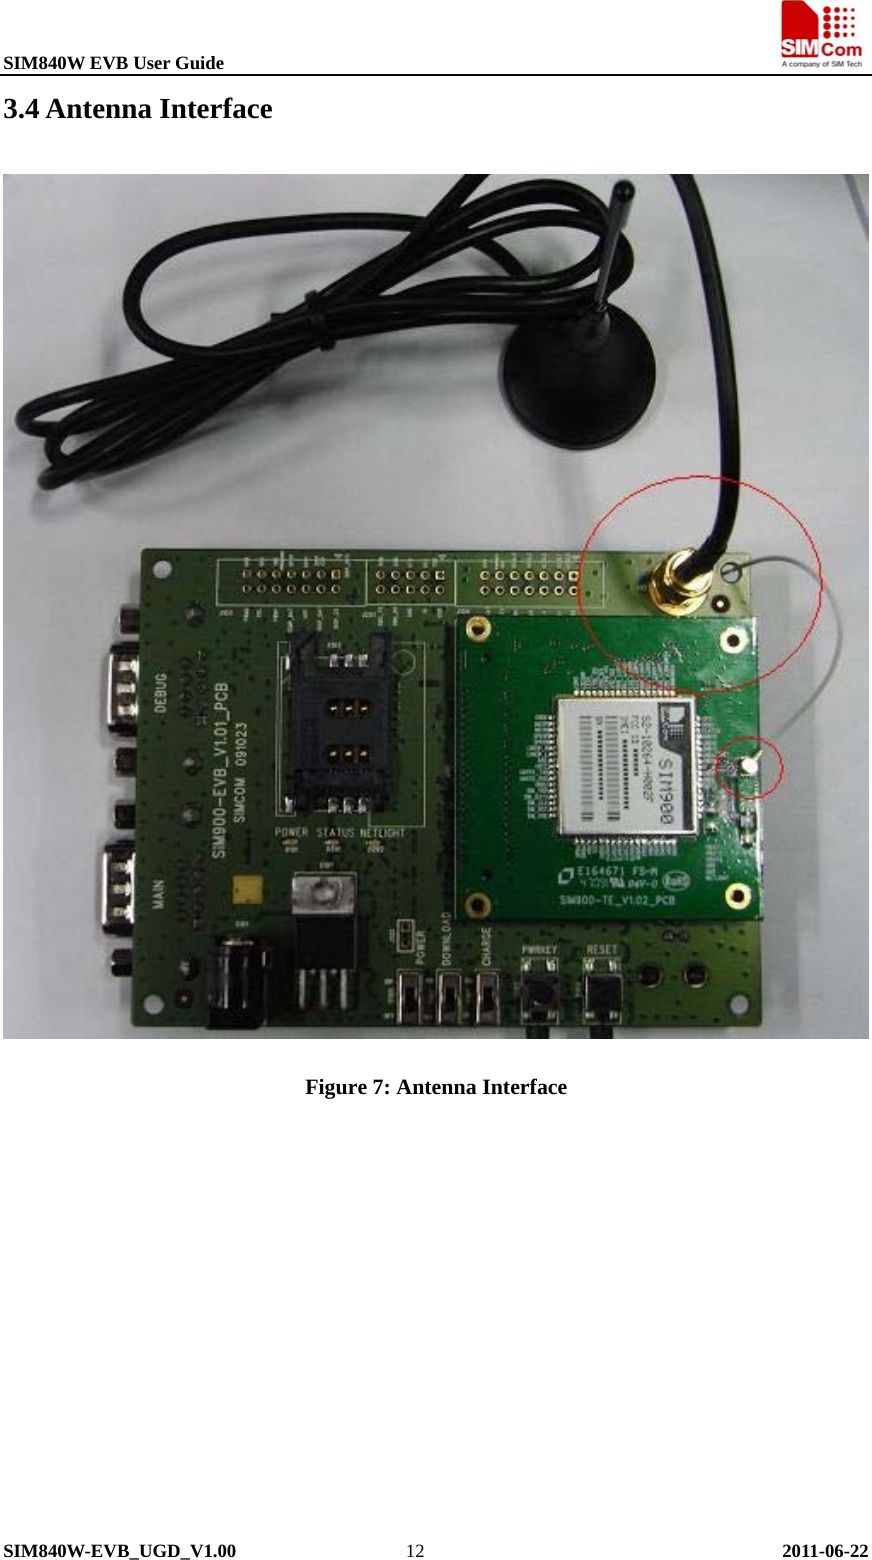 SIM840W EVB User Guide                                                             SIM840W-EVB_UGD_V1.00                  12                                      2011-06-22 3.4 Antenna Interface  Figure 7: Antenna Interface 